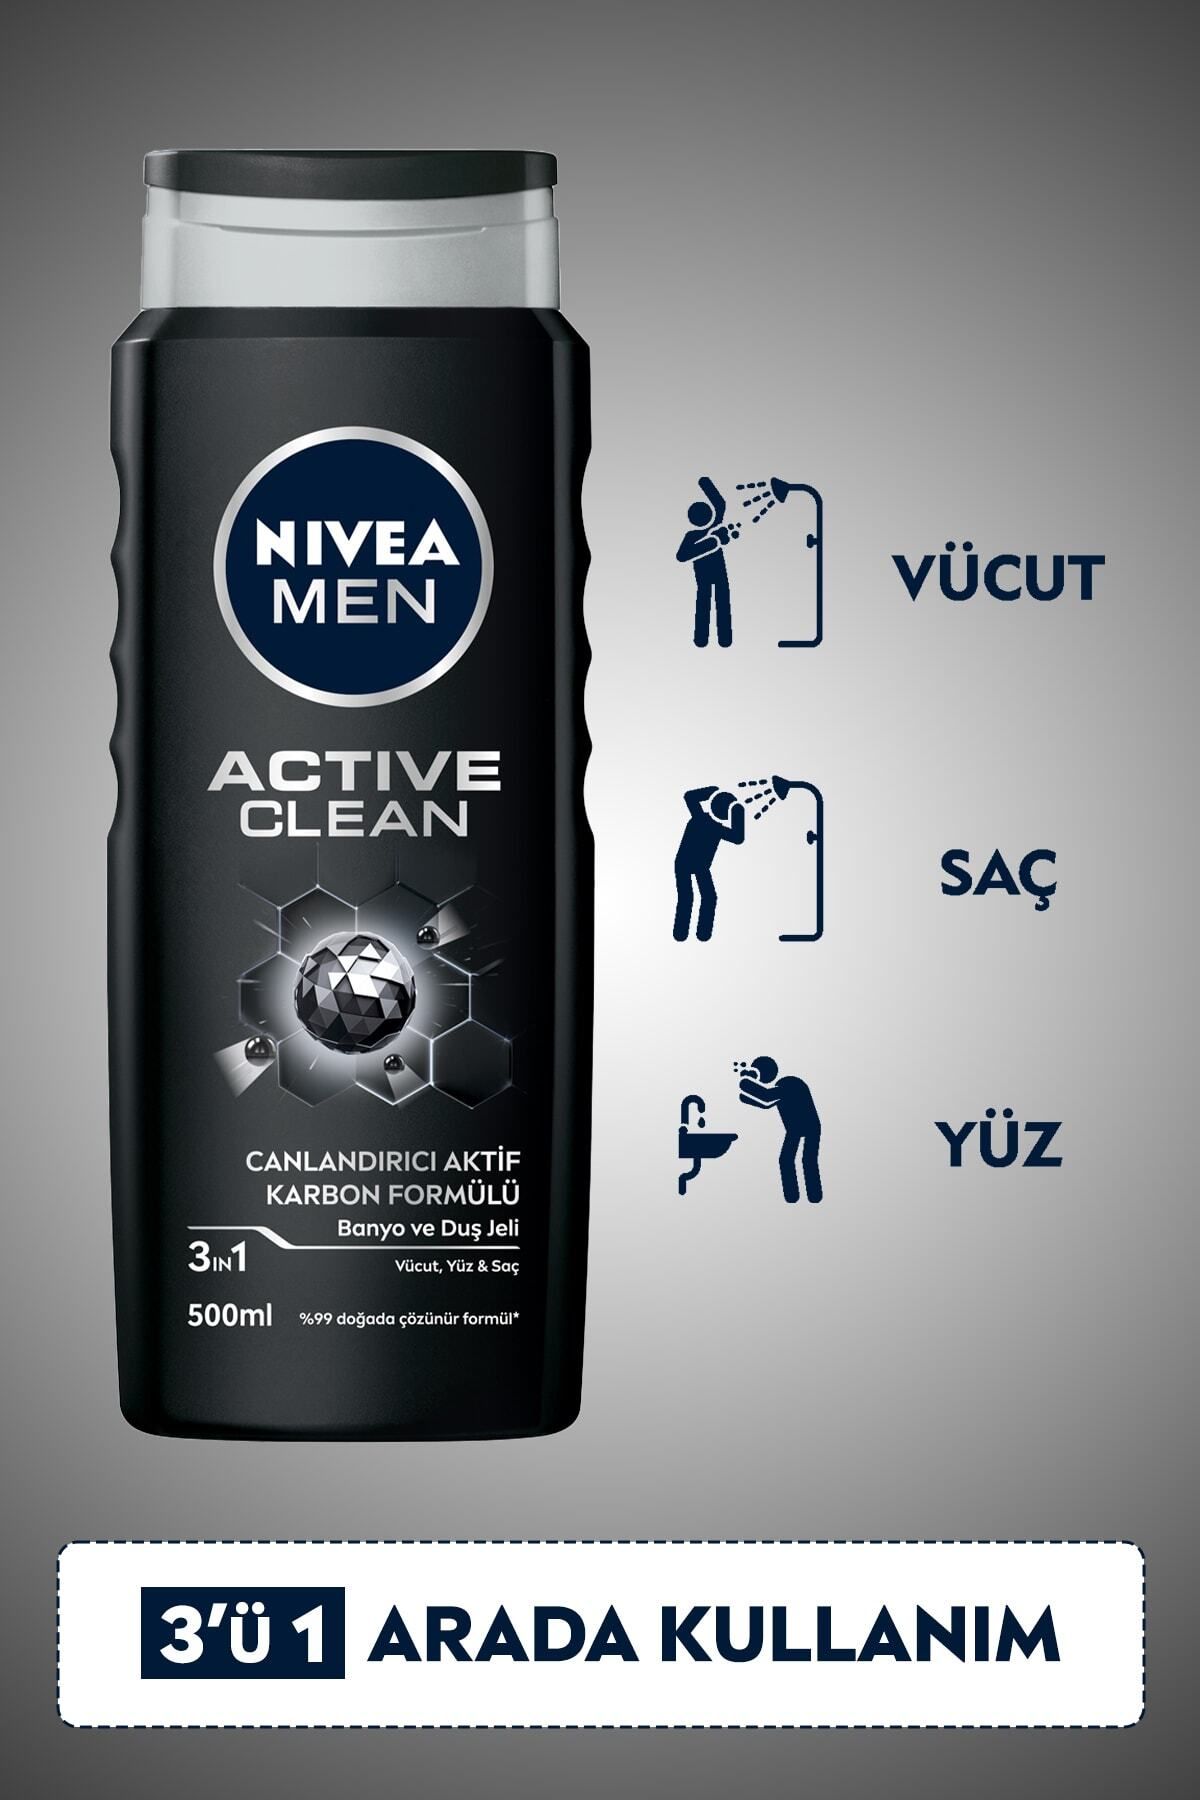 NIVEA ژل حمام مردانه تمیز کننده فعال 500 میلی لیتر بسته بندی 3 عددی حجم بزرگ